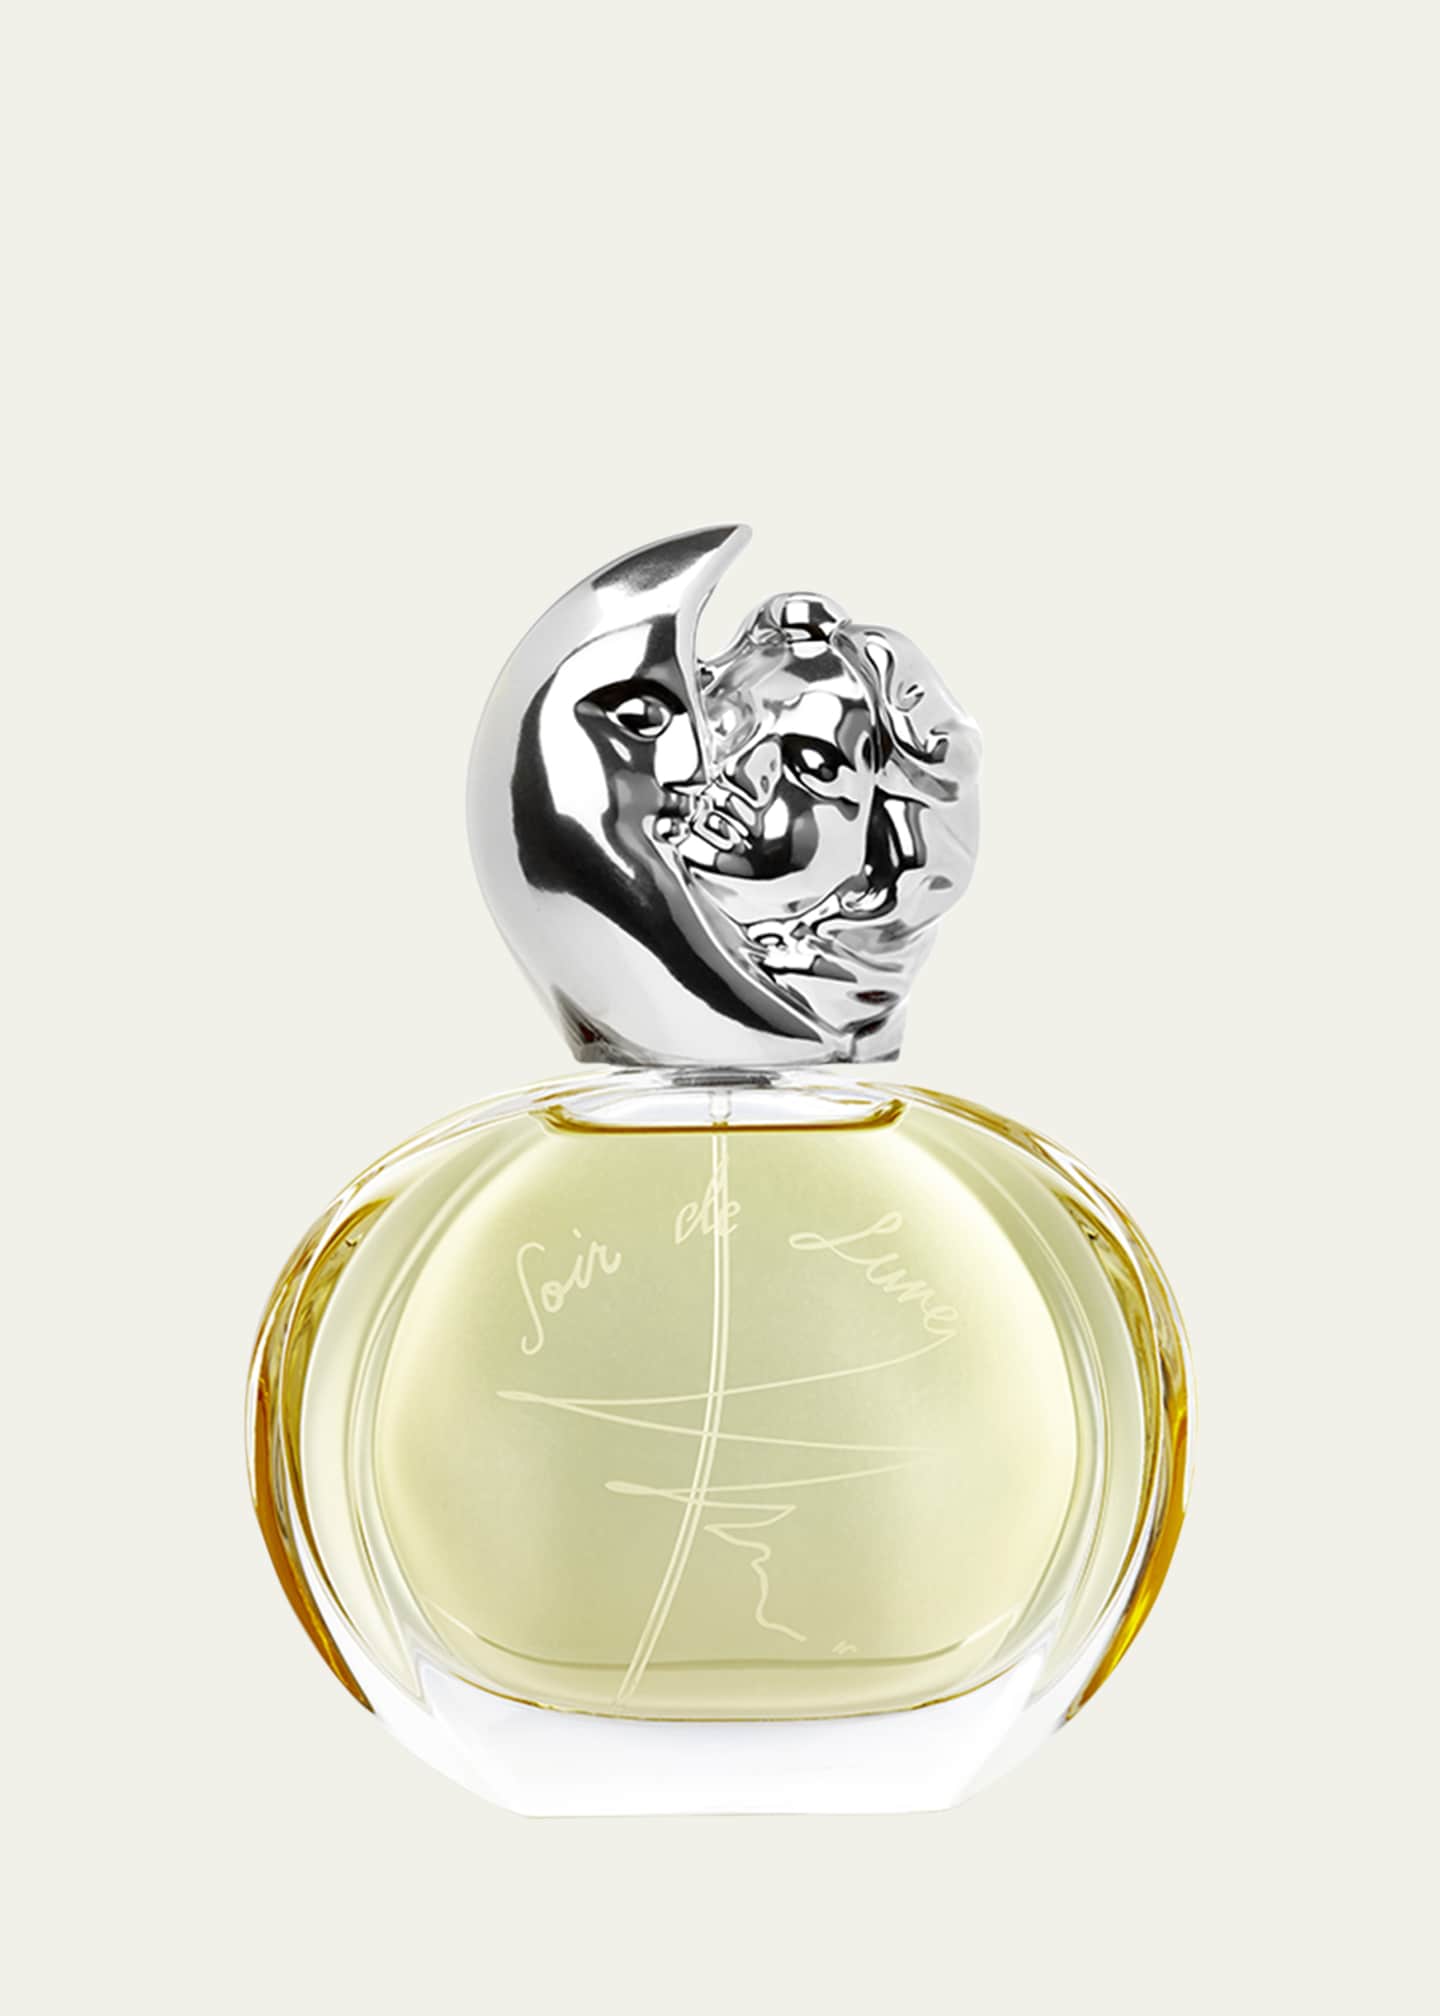 Sisley-Paris Soir Eau de Parfum, 1.0 oz. Bergdorf Goodman